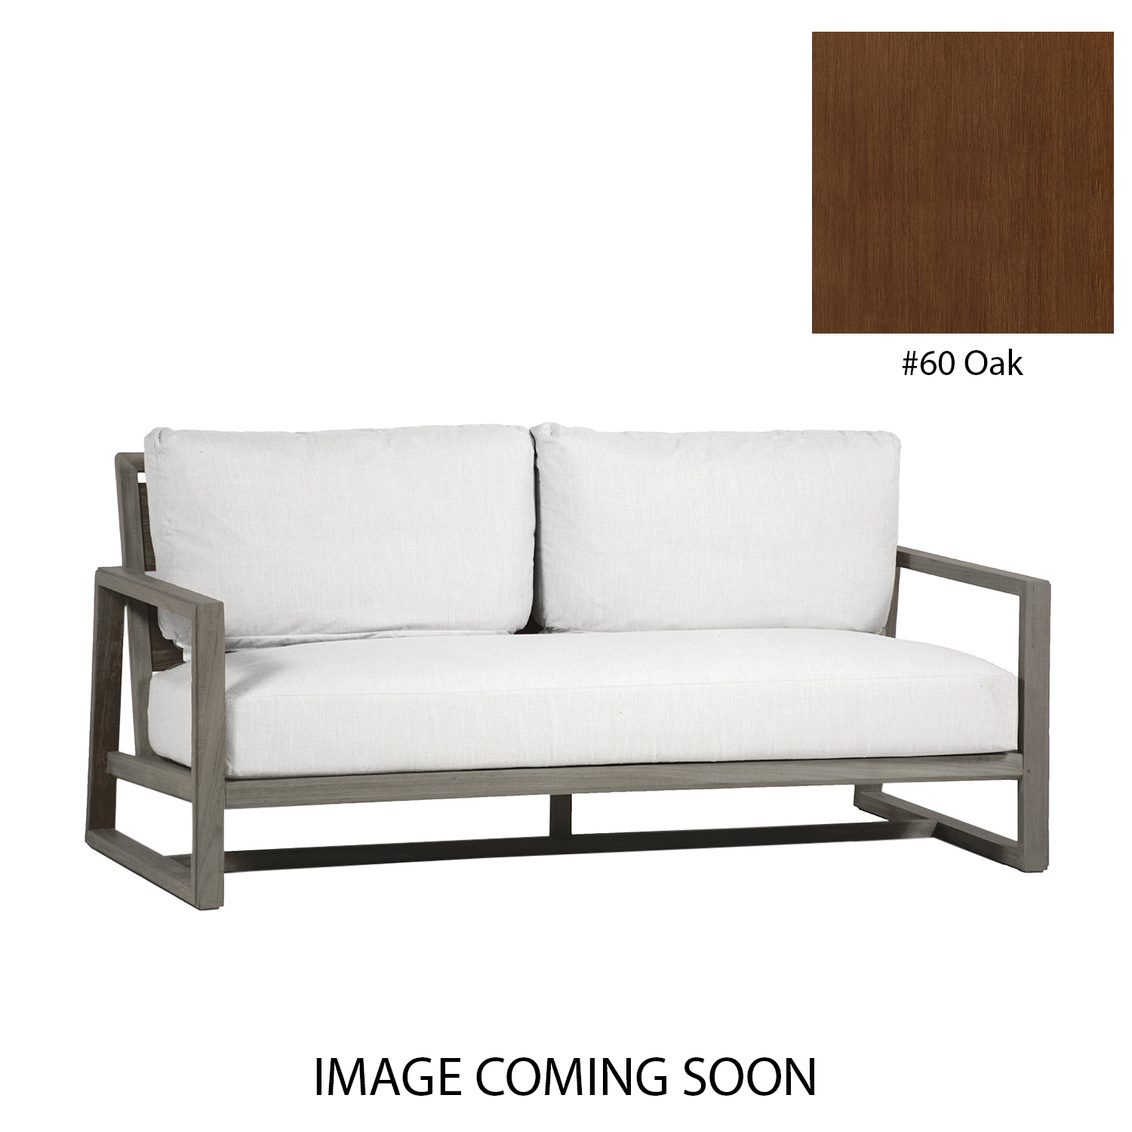 avondale aluminum sofa in oak – frame only product image